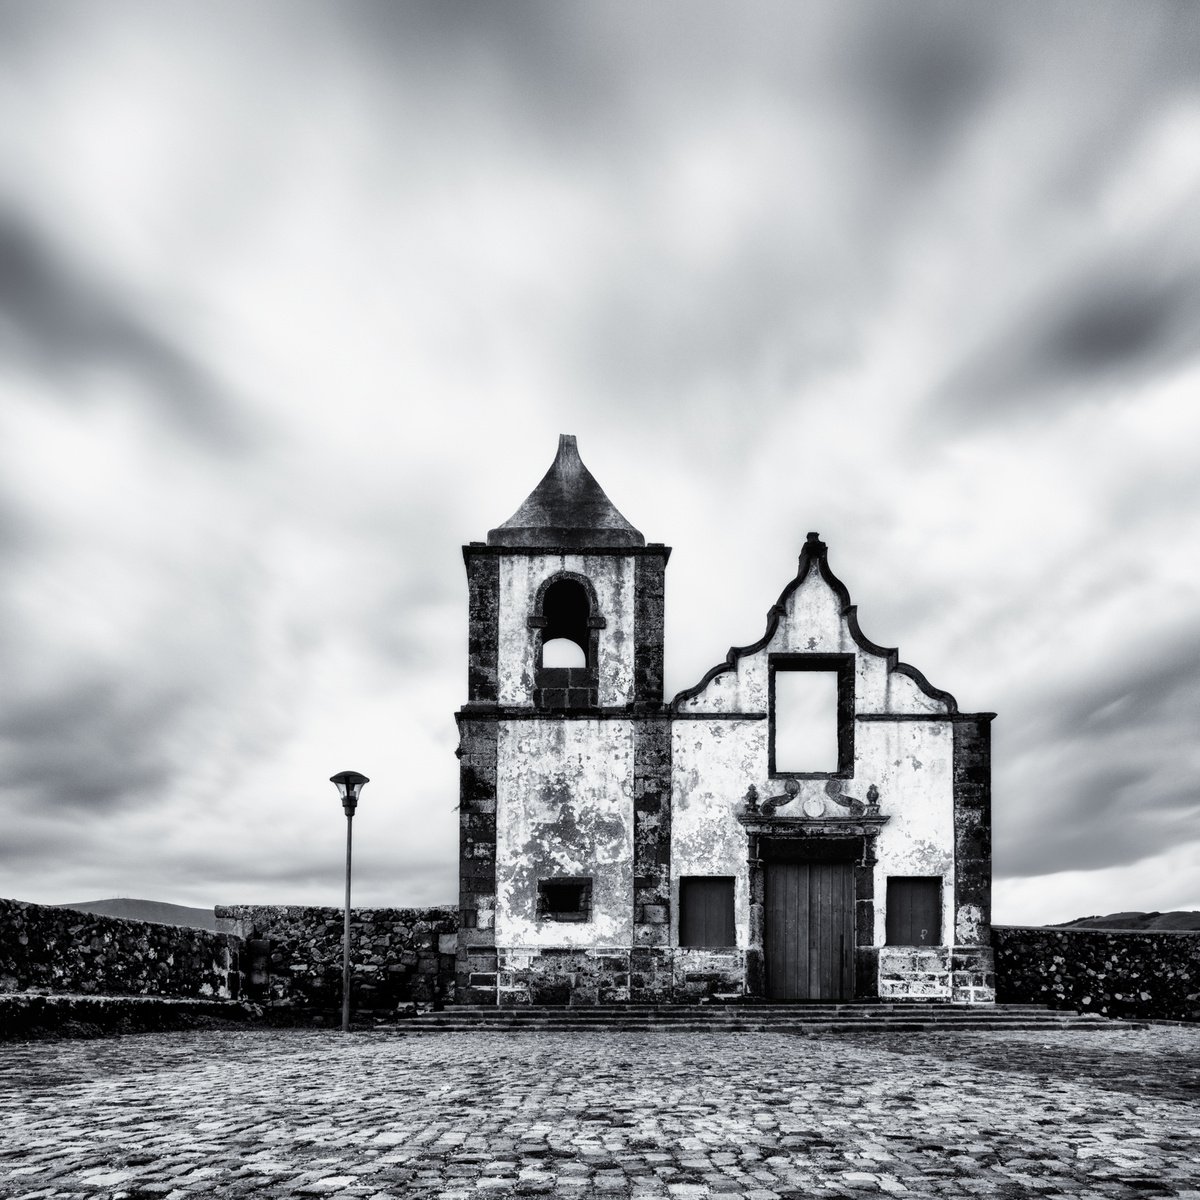 Abandoned Renaissance church by Karim Carella